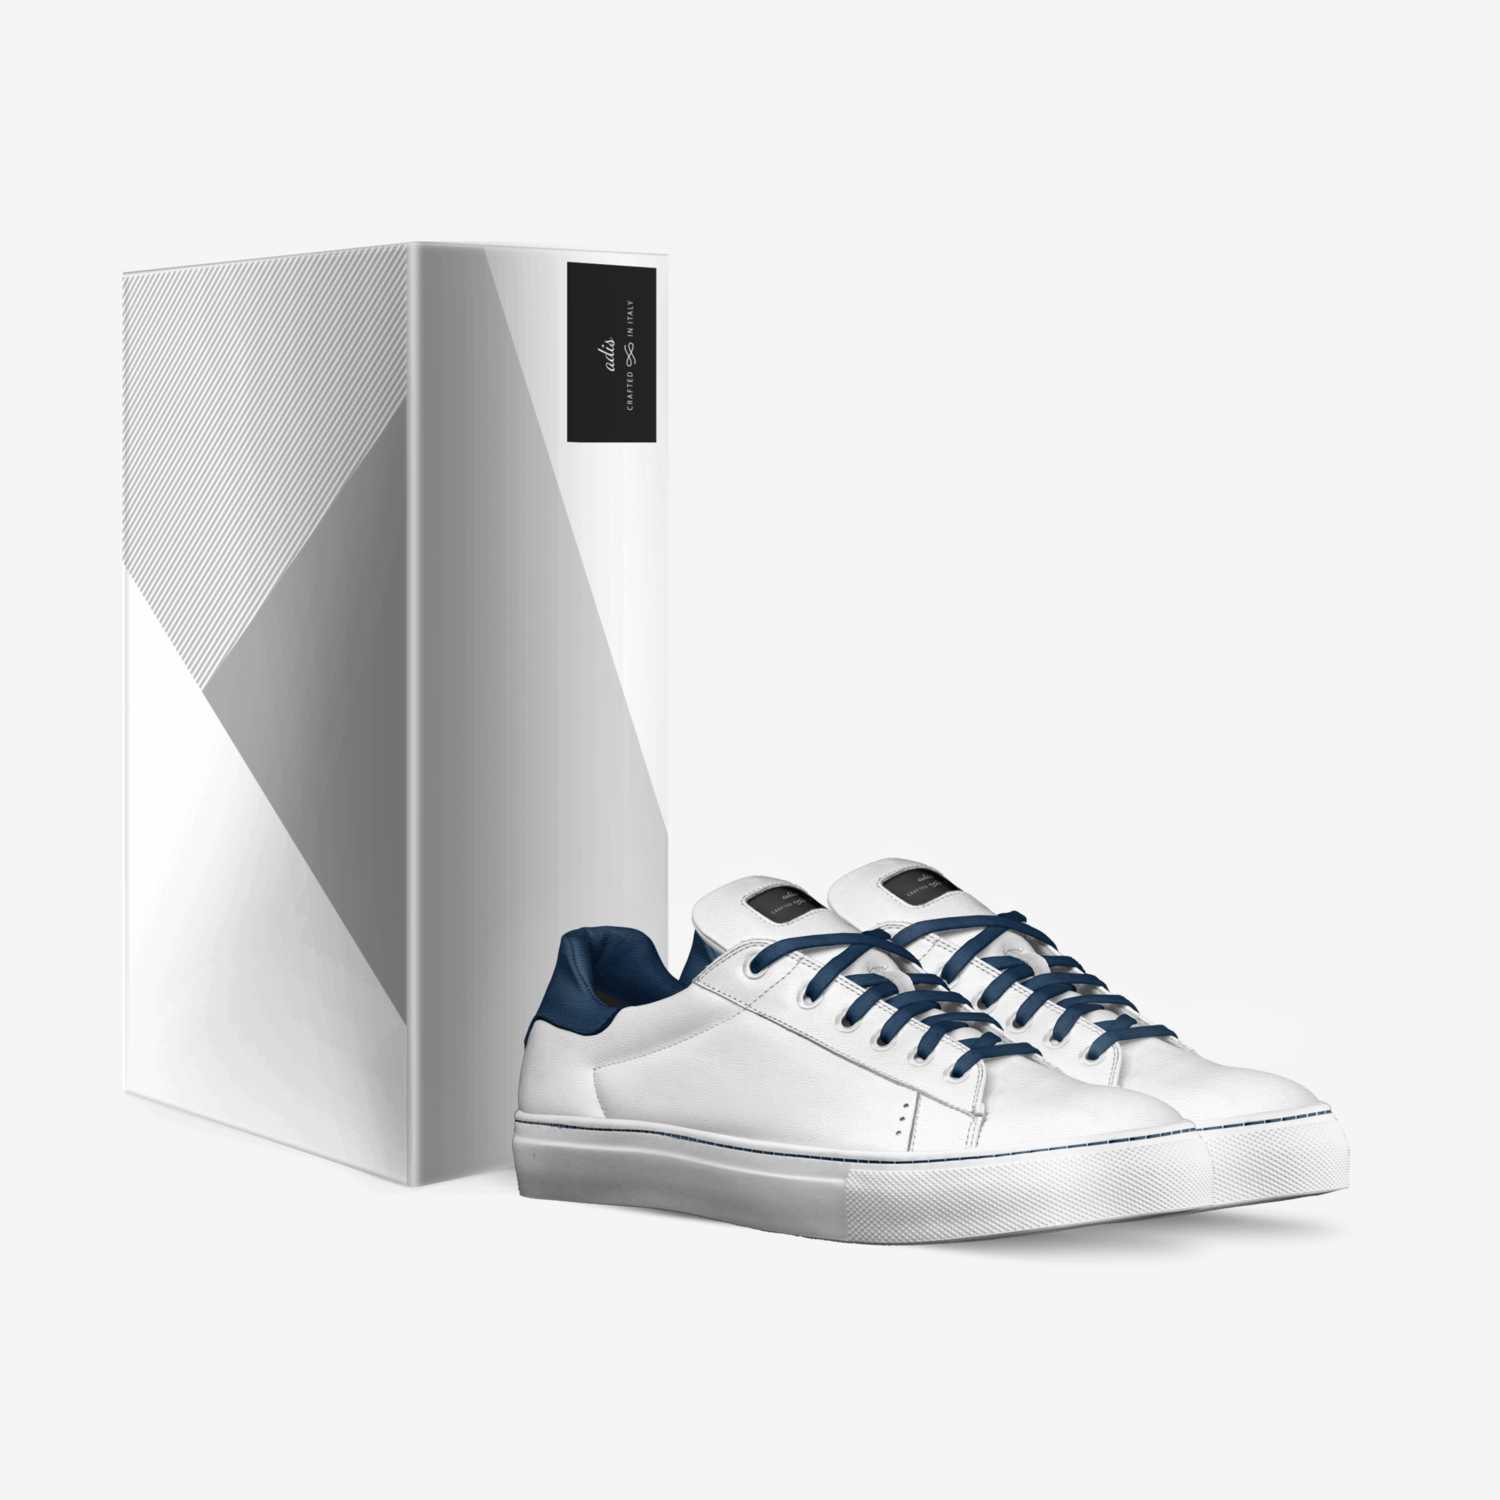 adis custom made in Italy shoes by Geri Leka | Box view